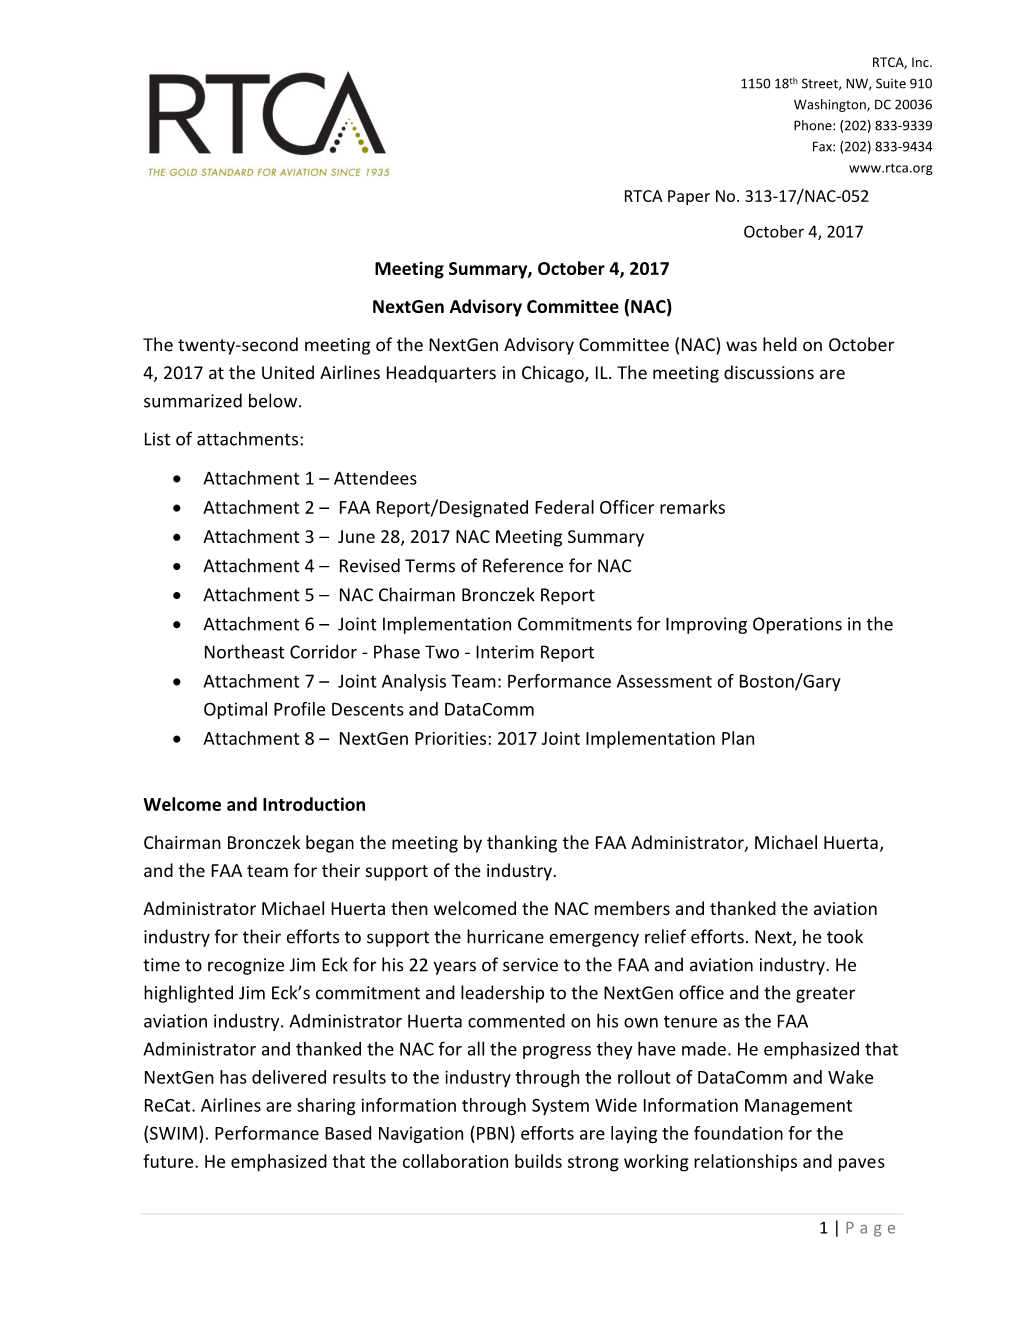 Meeting Summary, October 4, 2017 Nextgen Advisory Committee